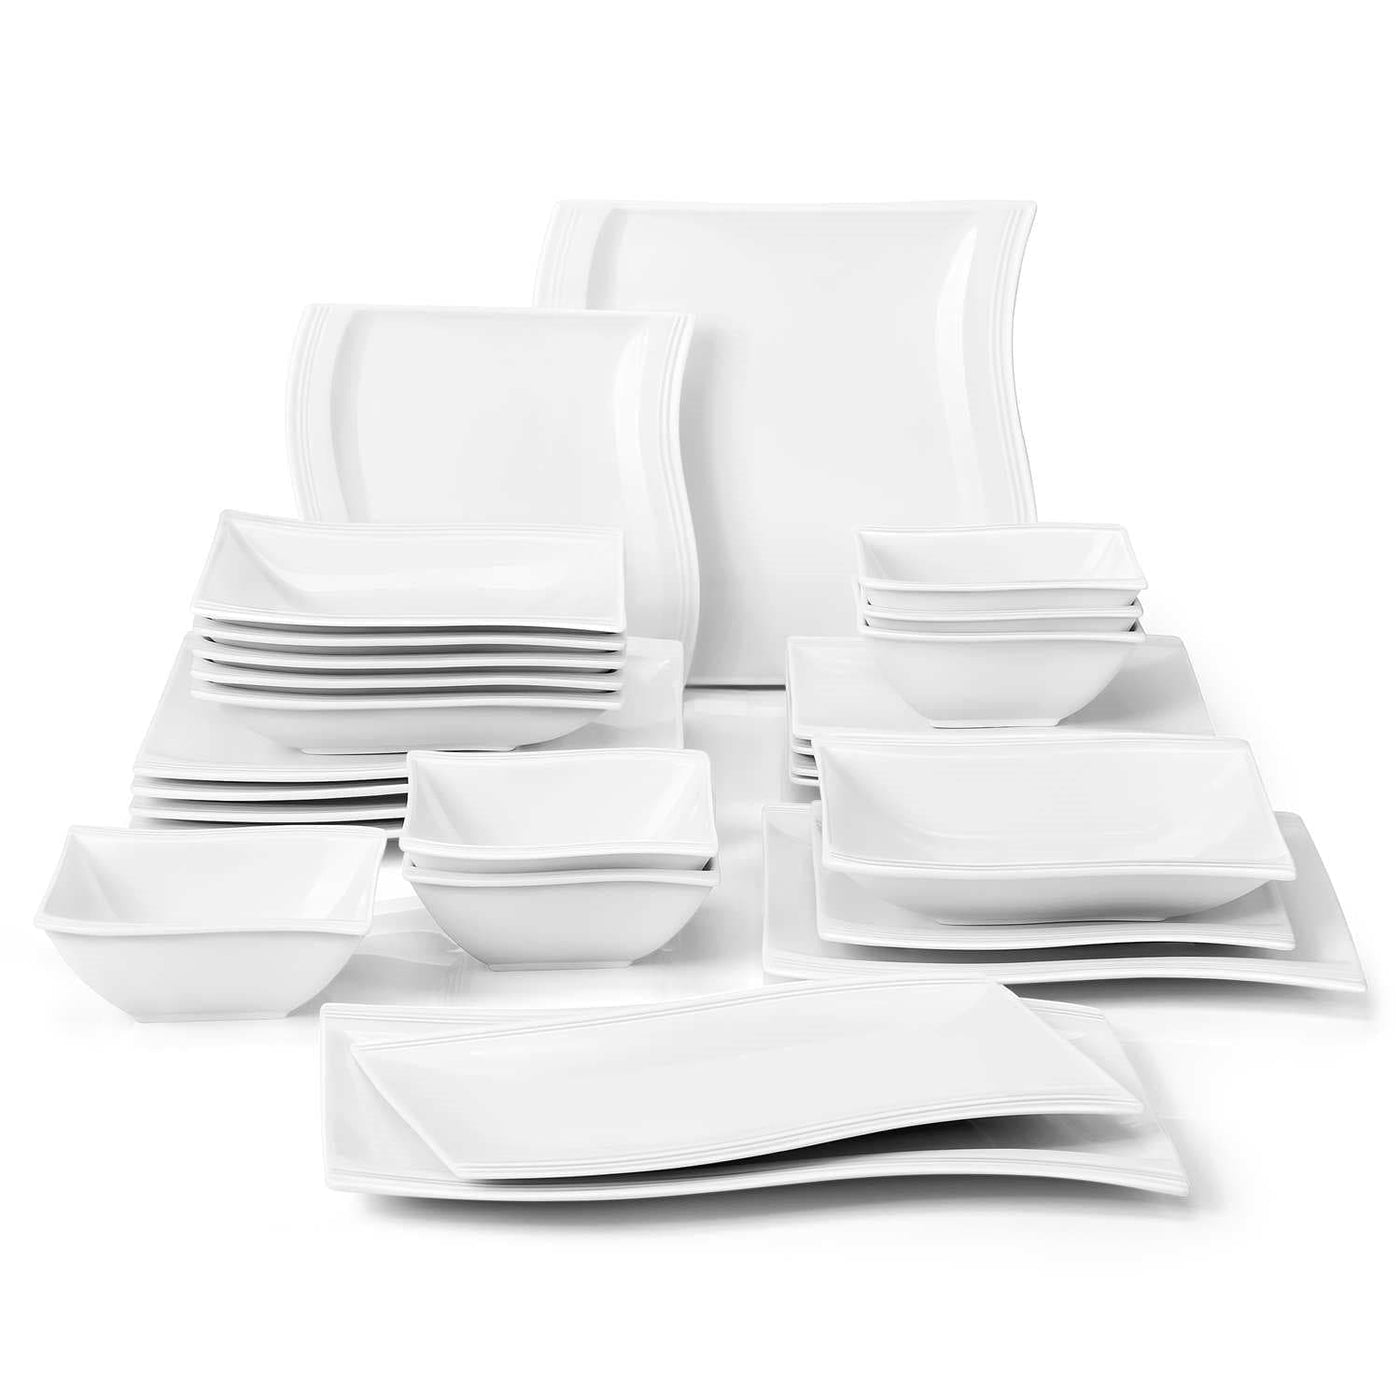 MALACASA 50-Piece White Porcelain Dinnerware in the Dinnerware